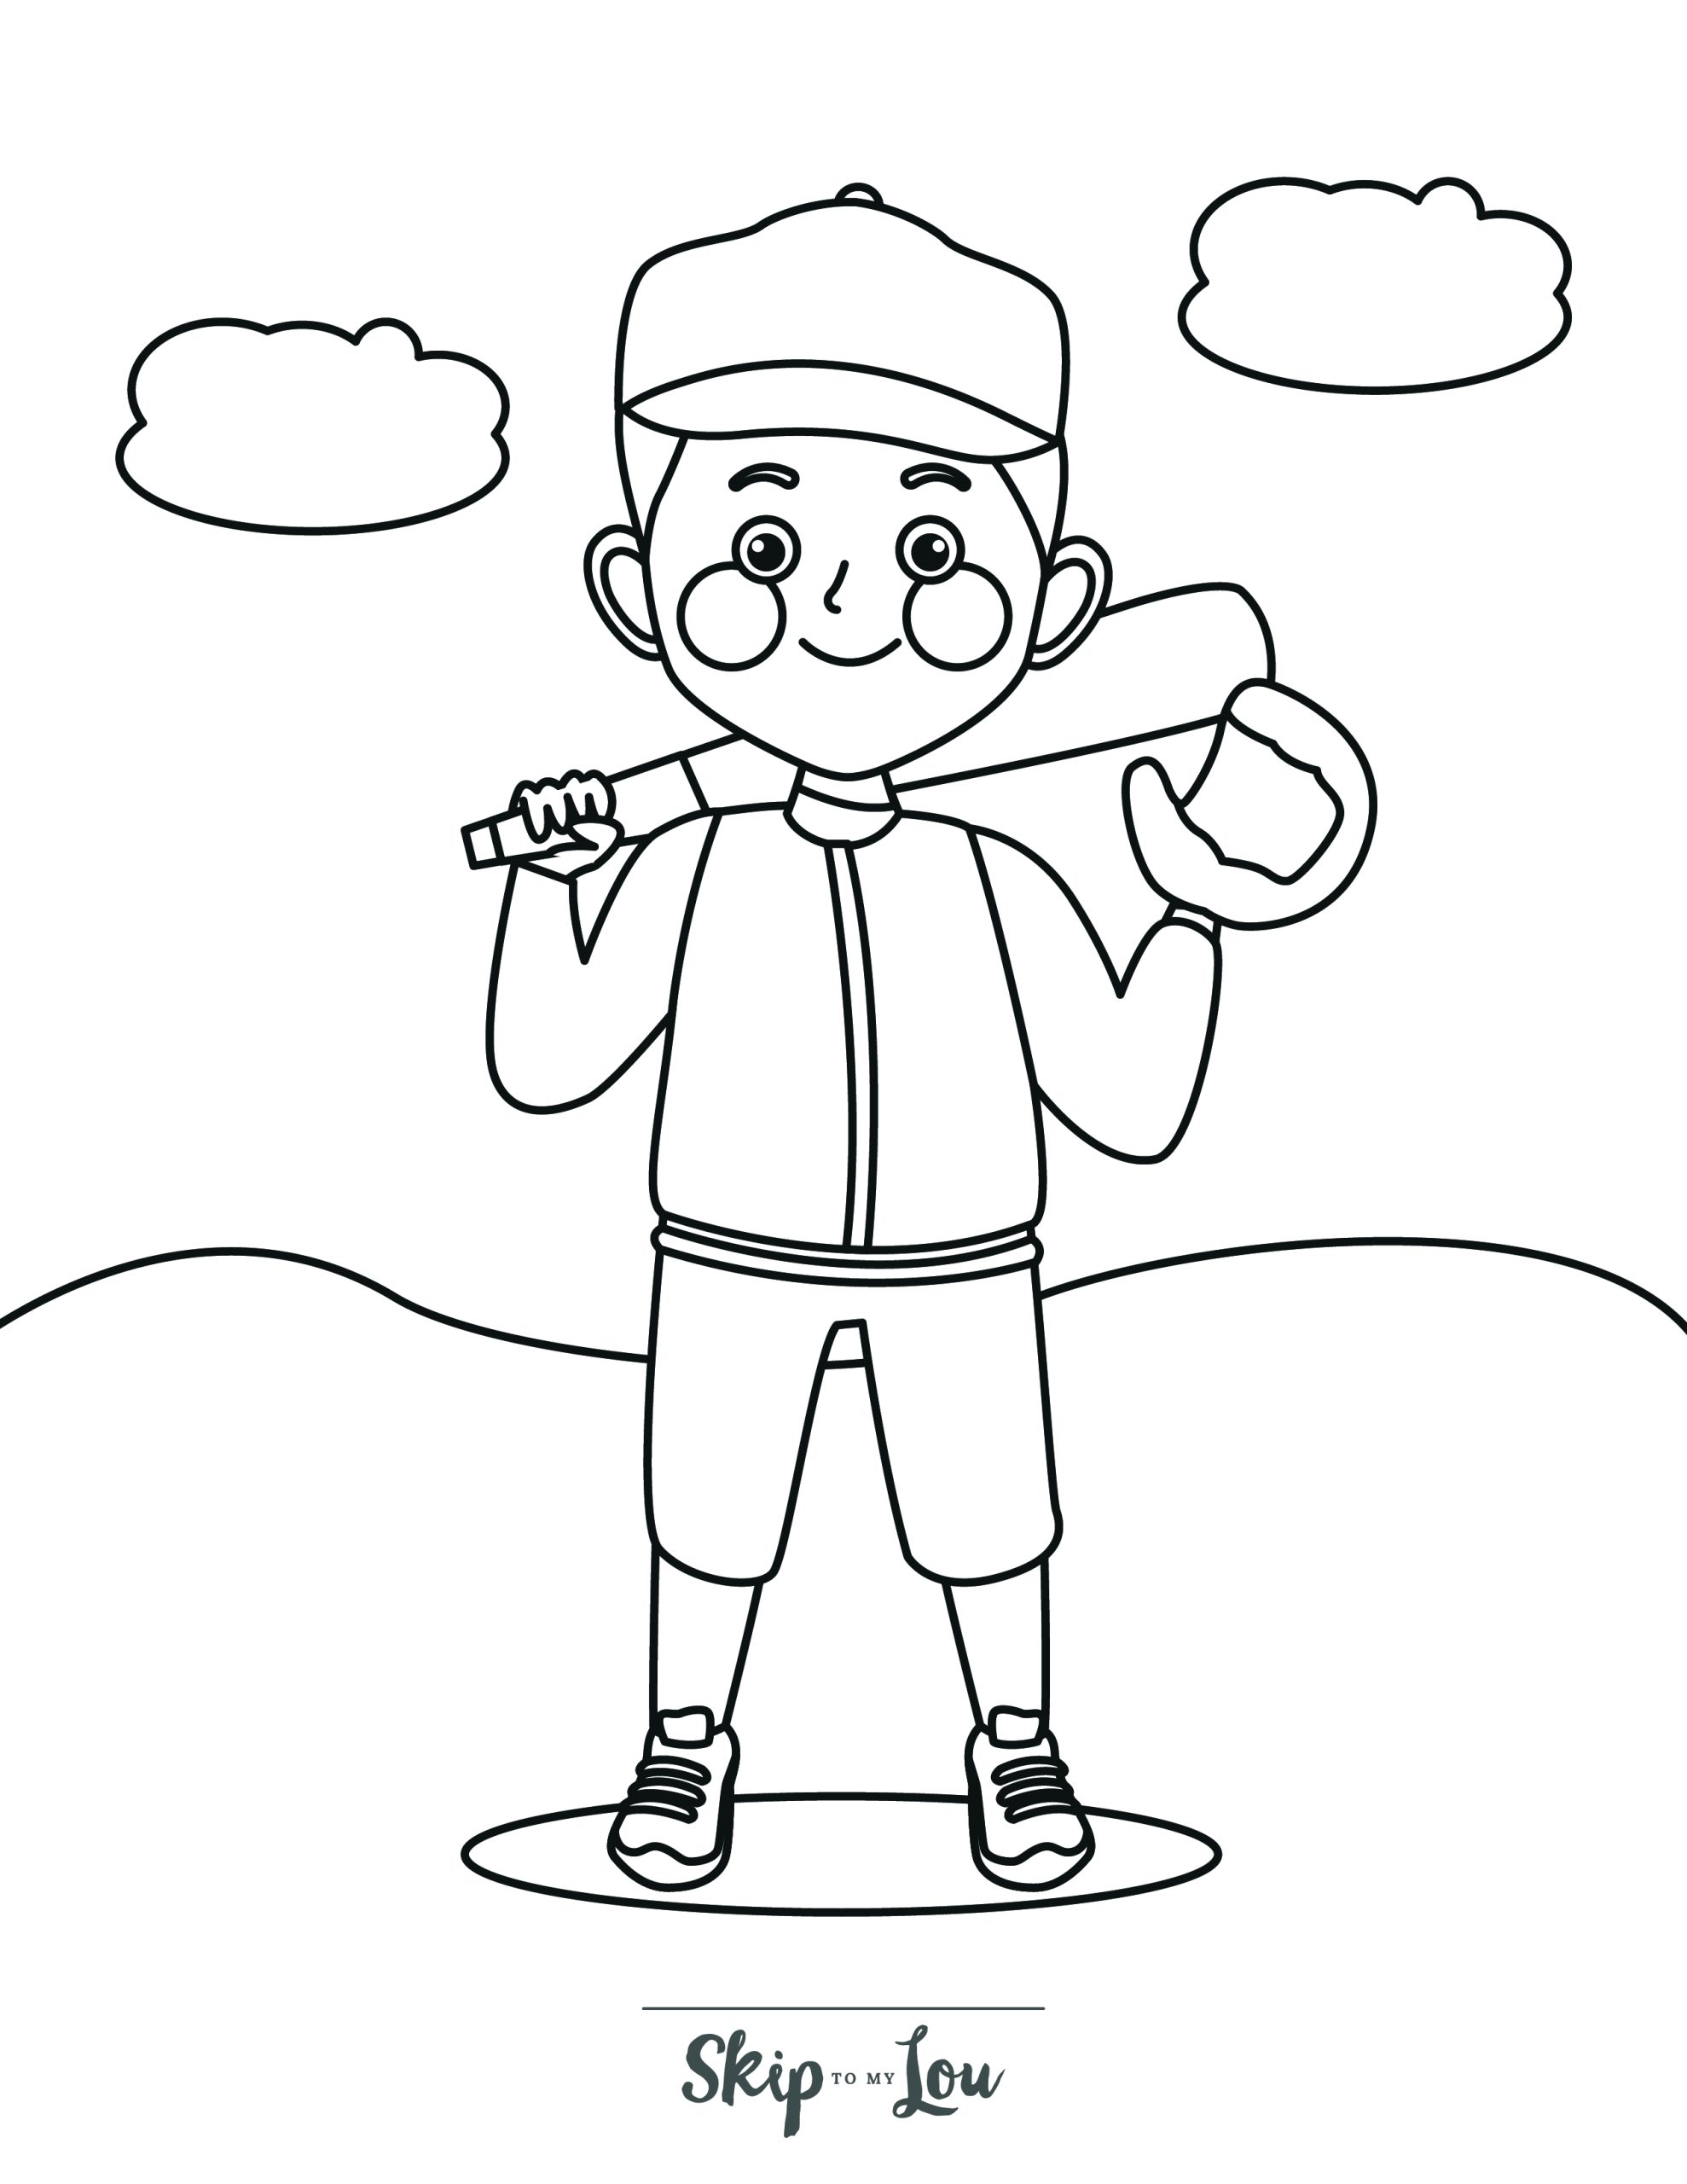 Baseball Coloring Page 9 - A line drawing of a baseball player, holding a bat and wearing a baseball glove.